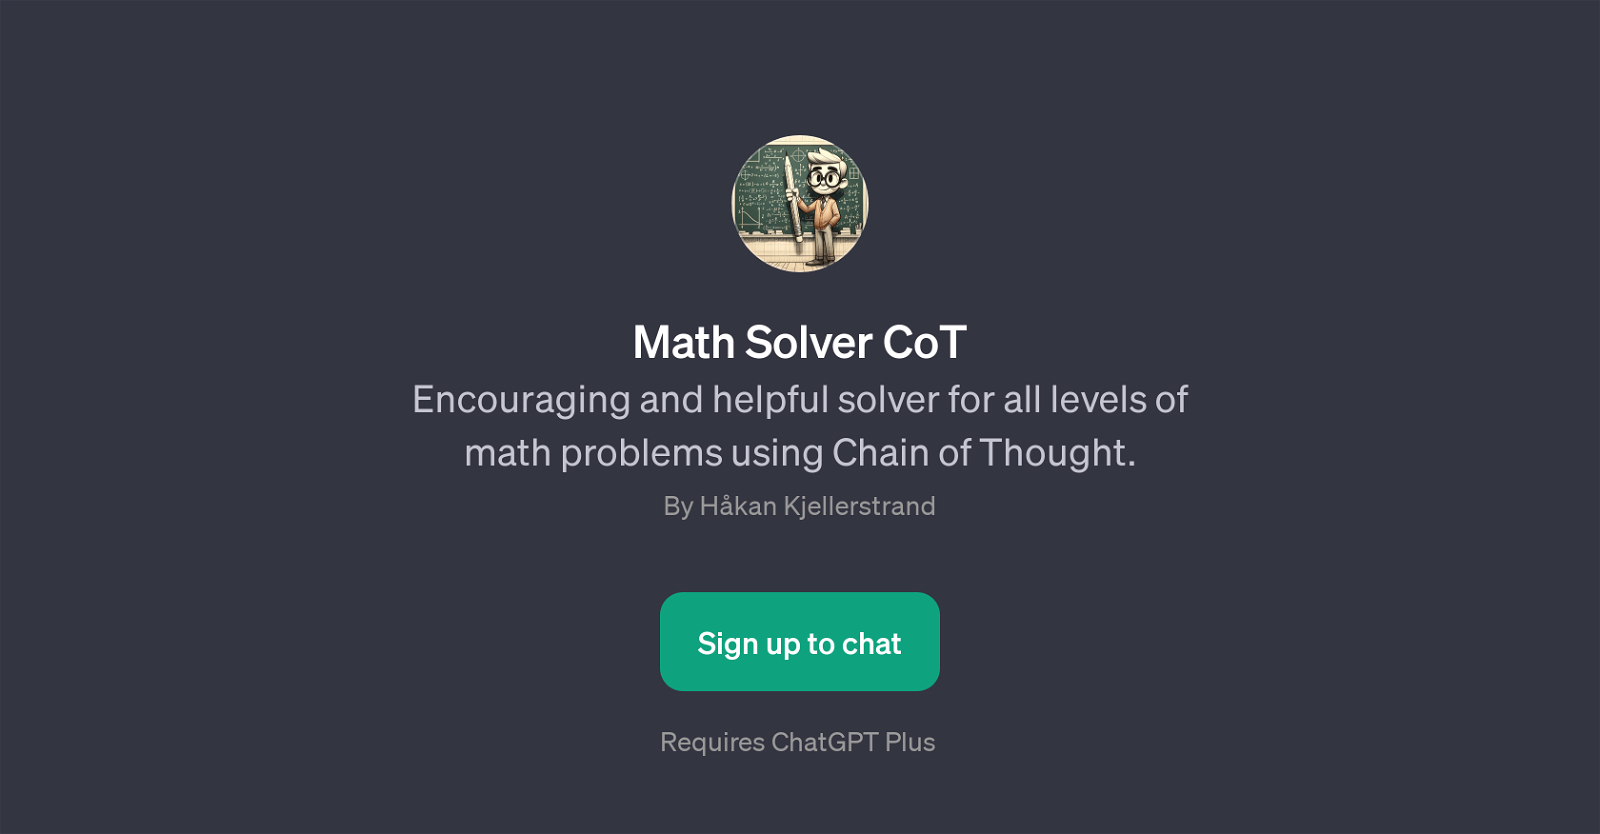 Math Solver CoT website